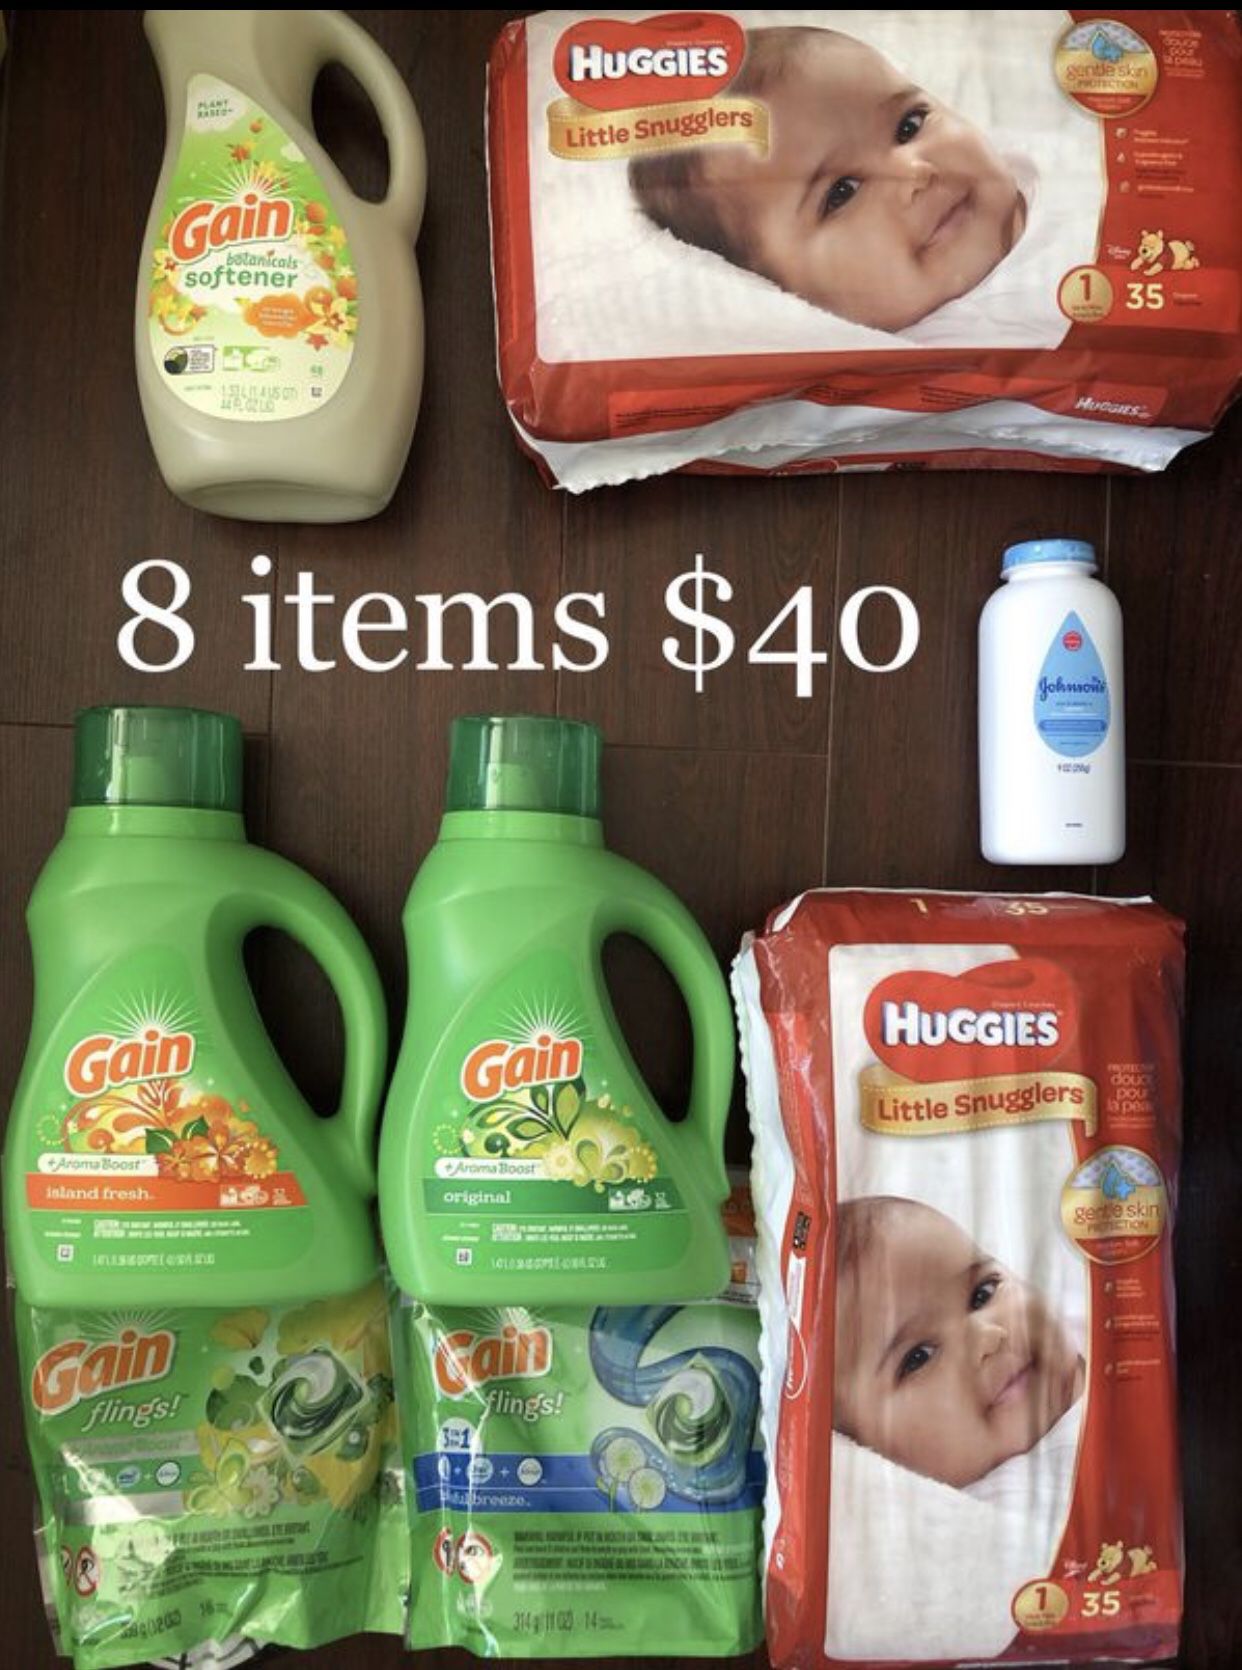 2 Huggies Diapers, 5 Gain: 2 Liquid Laundry Detergents, 2 Pods, 1 Fabric Softener; 1 Johnson Baby Powder: 8 Items $40